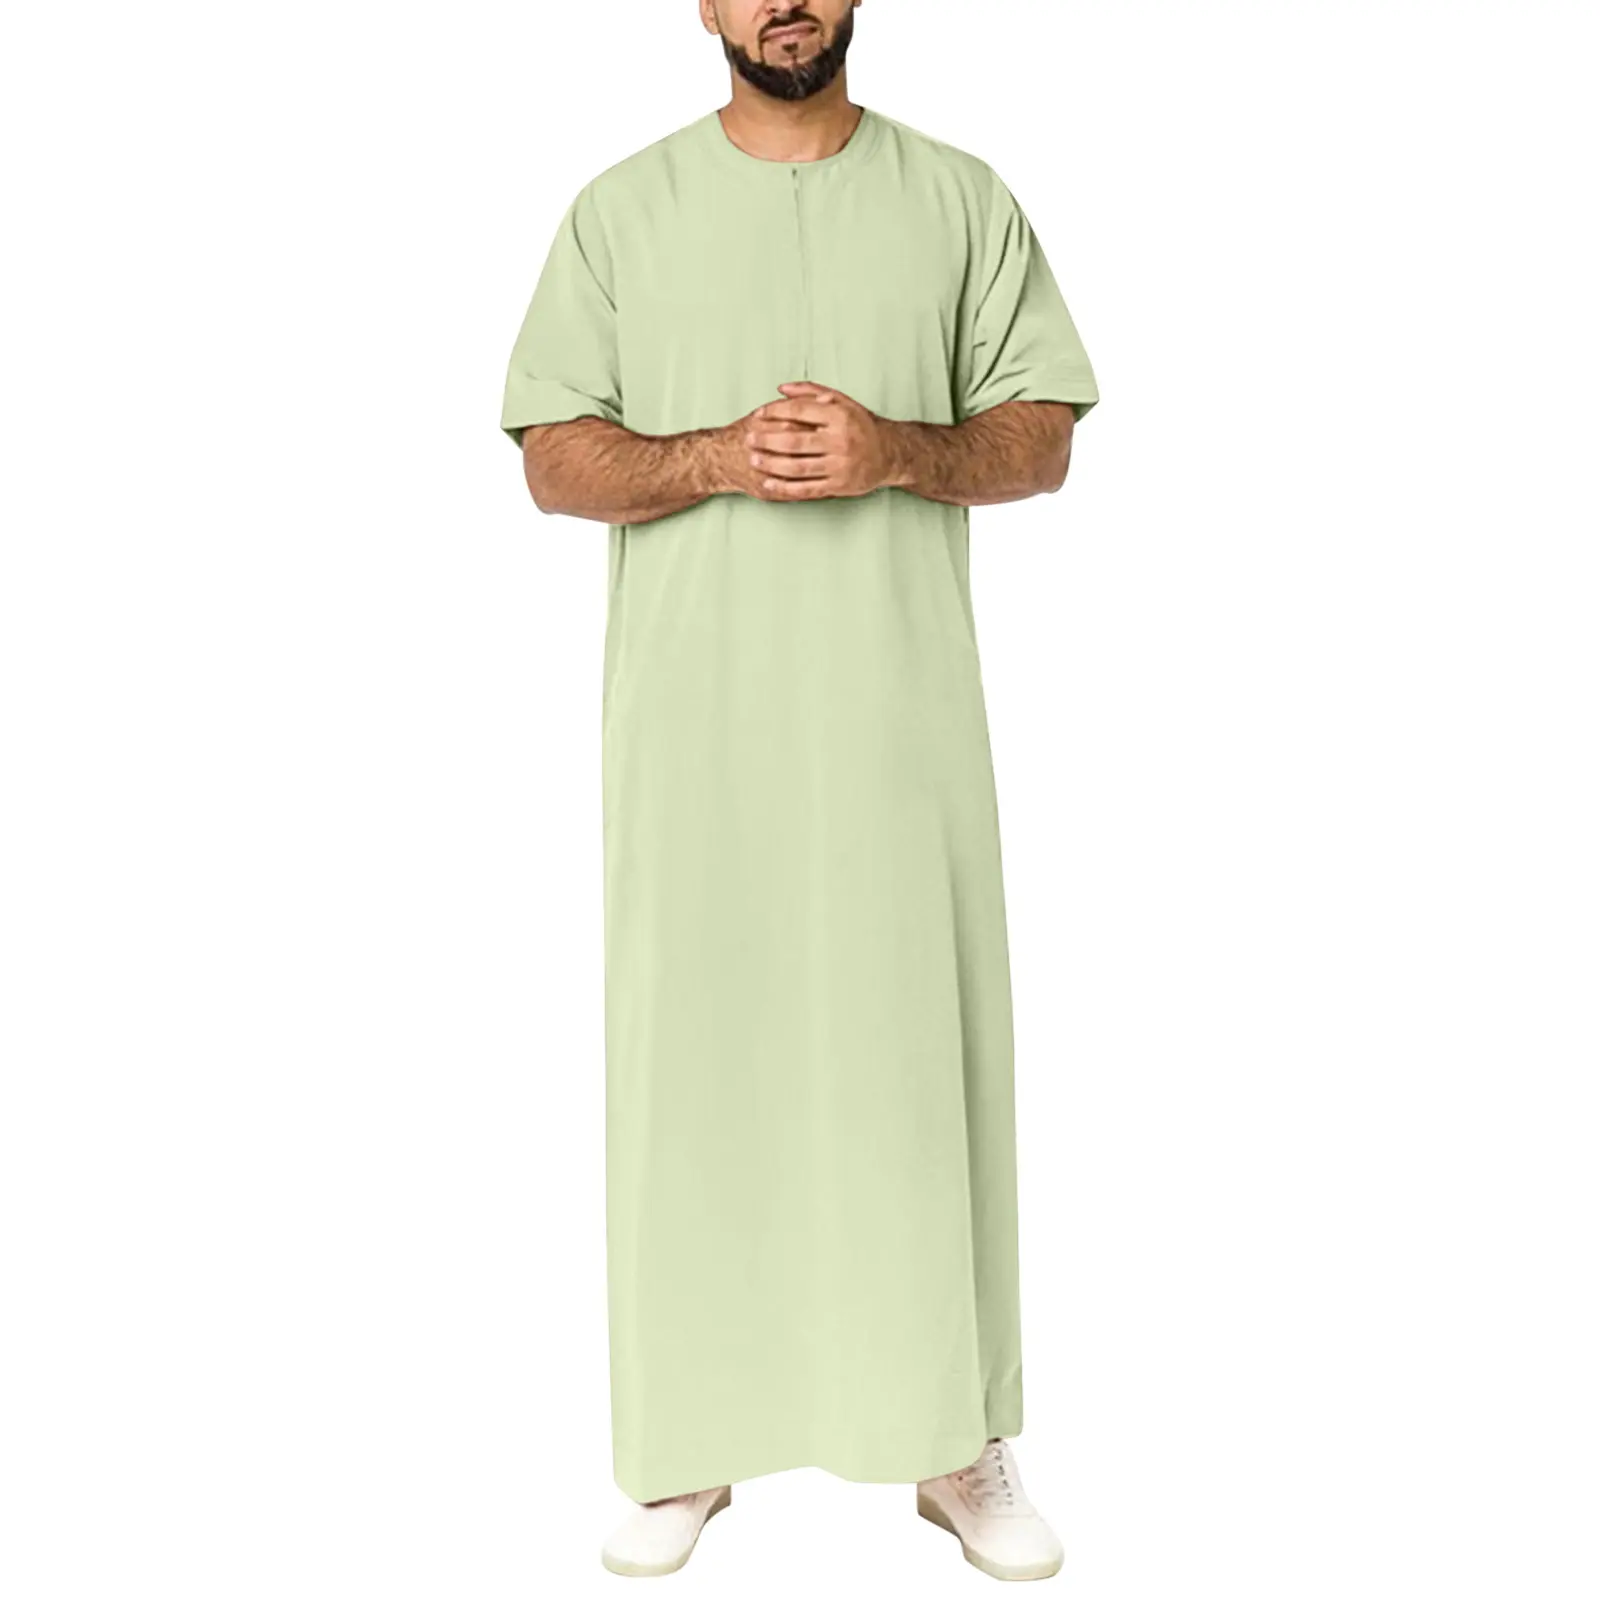 Elegant S-5xl Plus Size Men's Thobe Vintage Arab Robe Short Sleeve Kaftan Islamic Clothing for Muslim Men Dubai Saudi Arabia